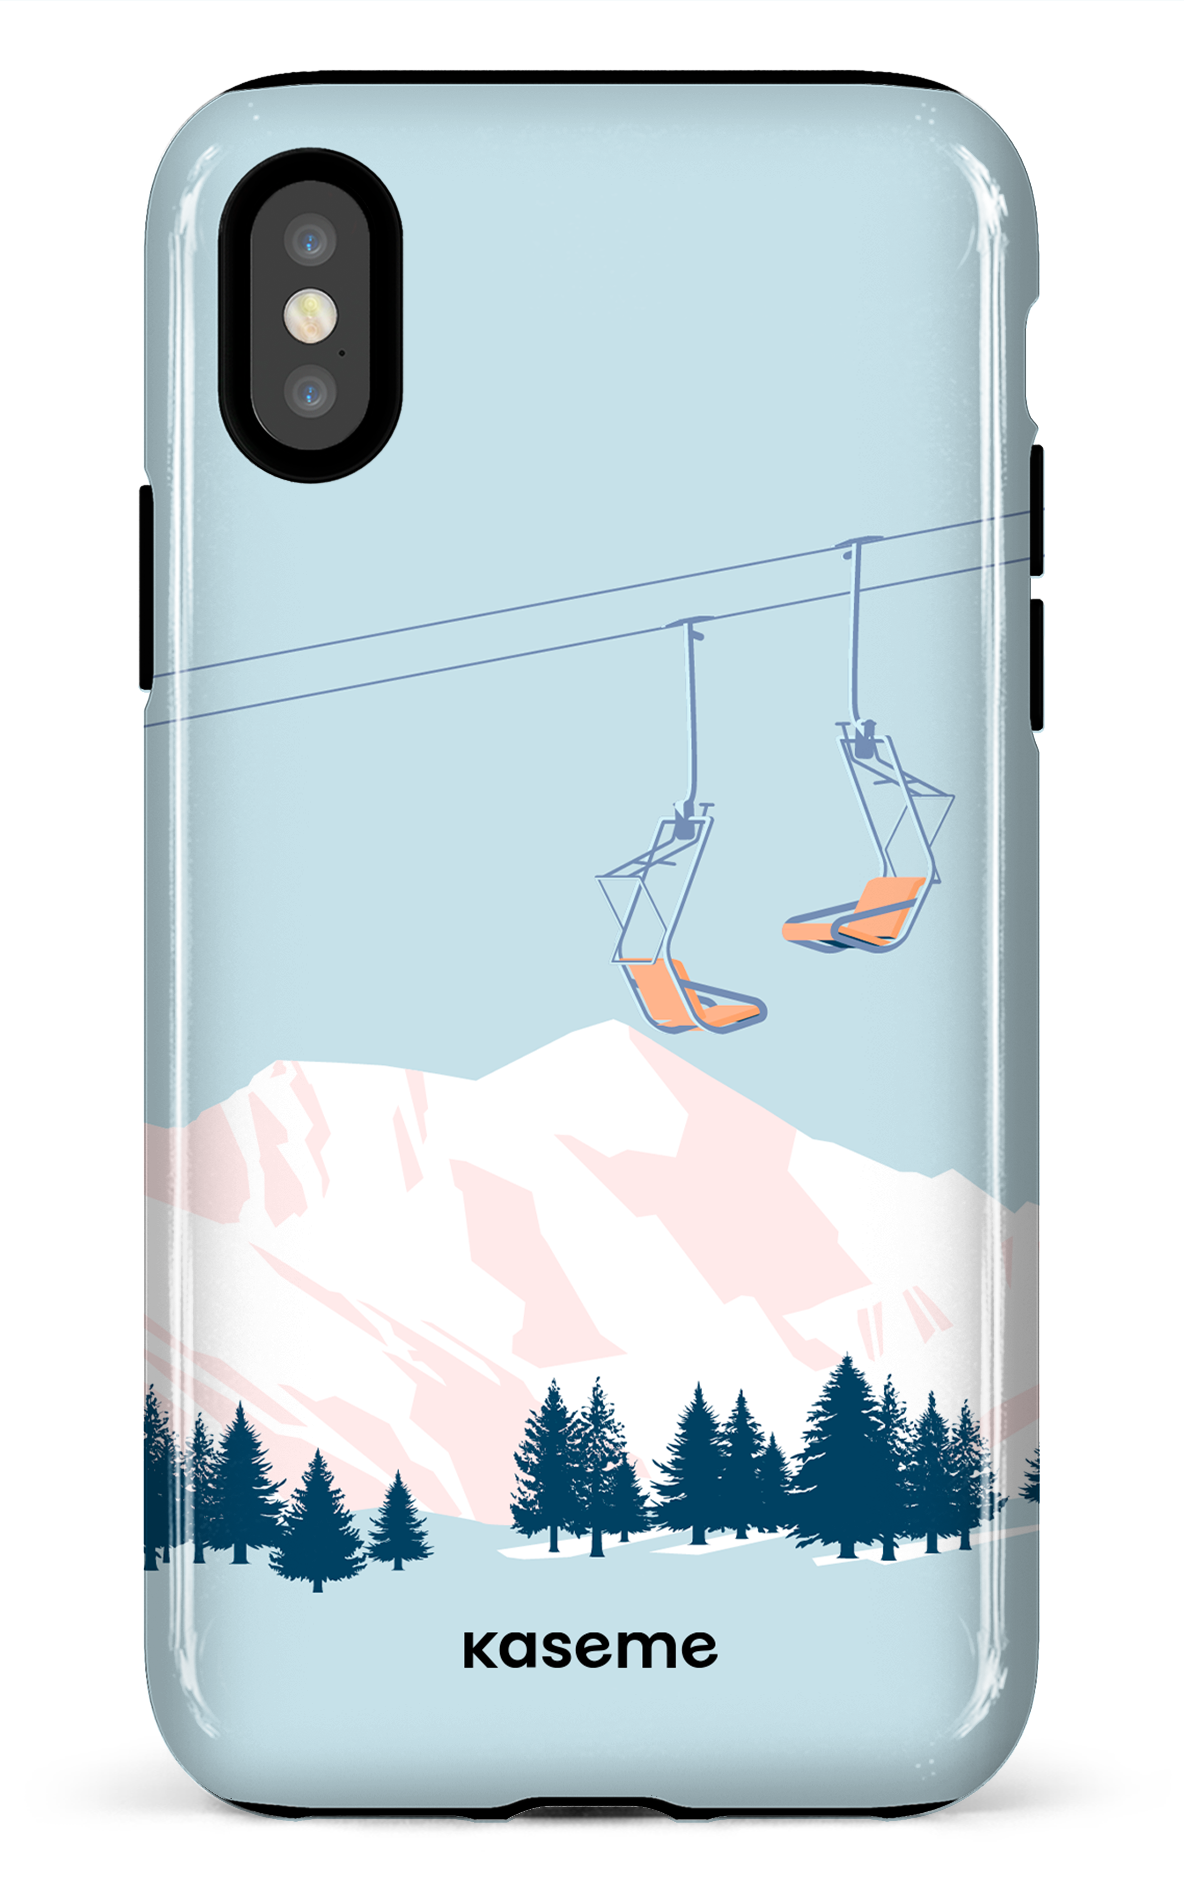 Ski Lift - iPhone X/Xs